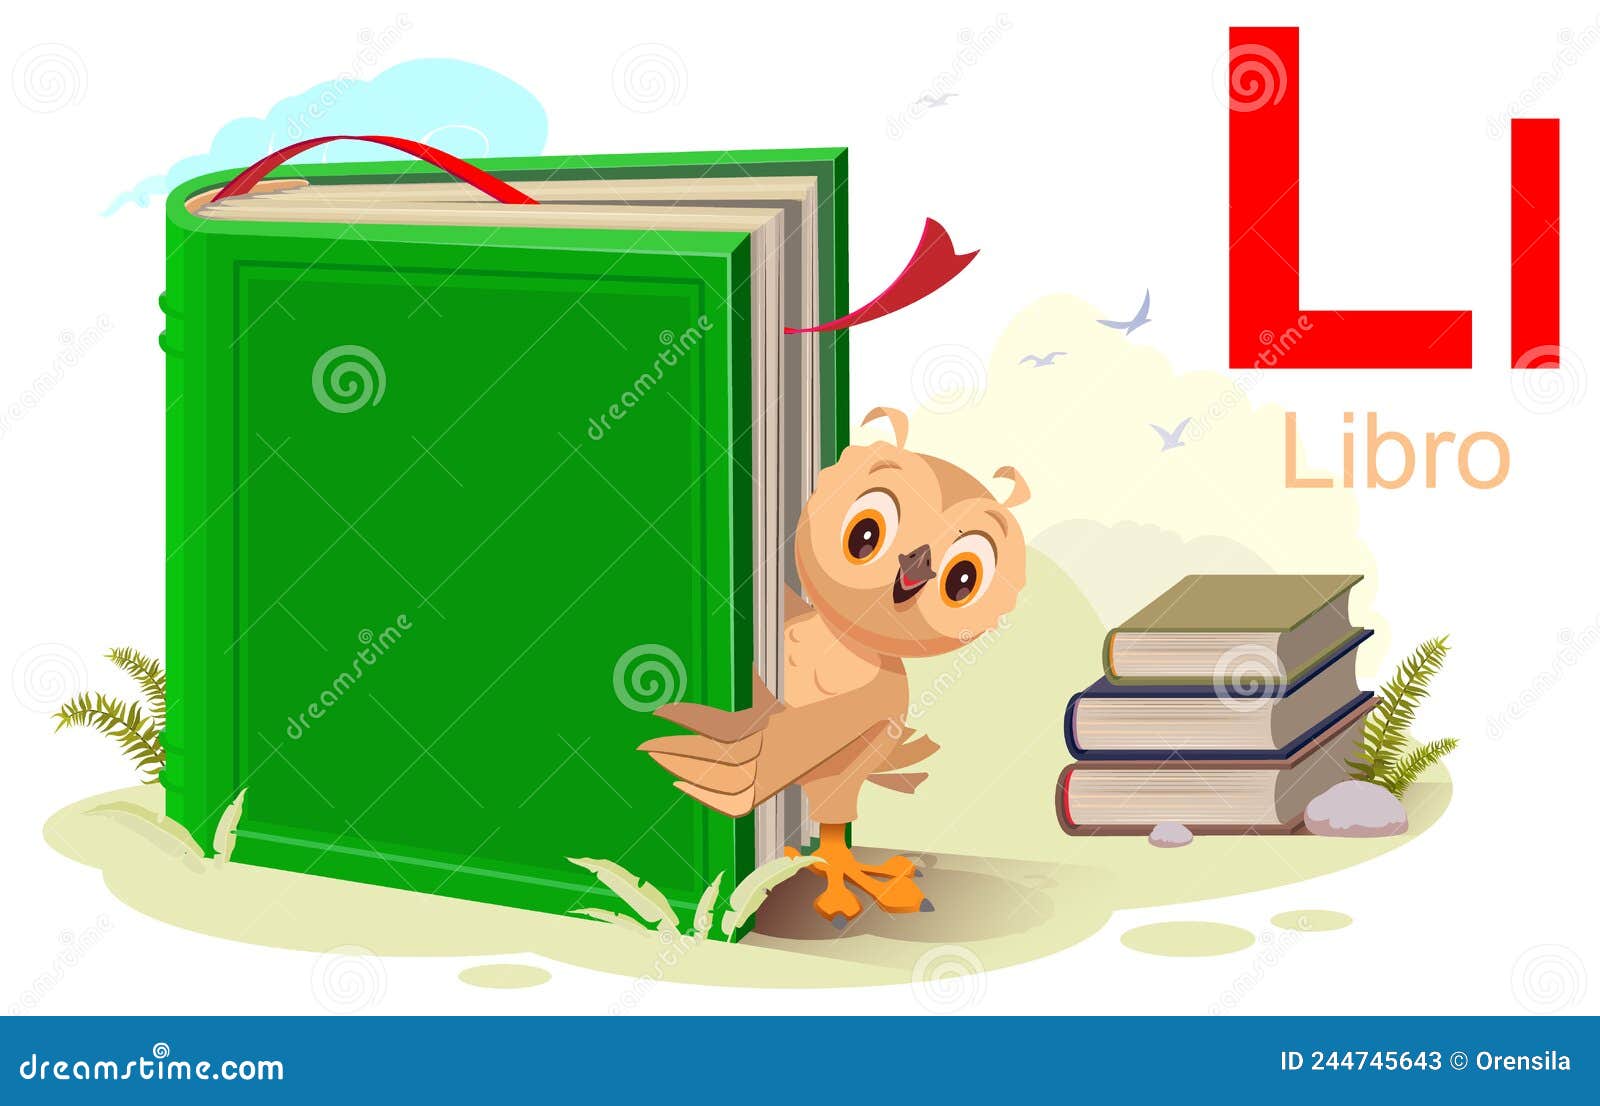 abc spanish alphabet letter l libro translation book. owl read book